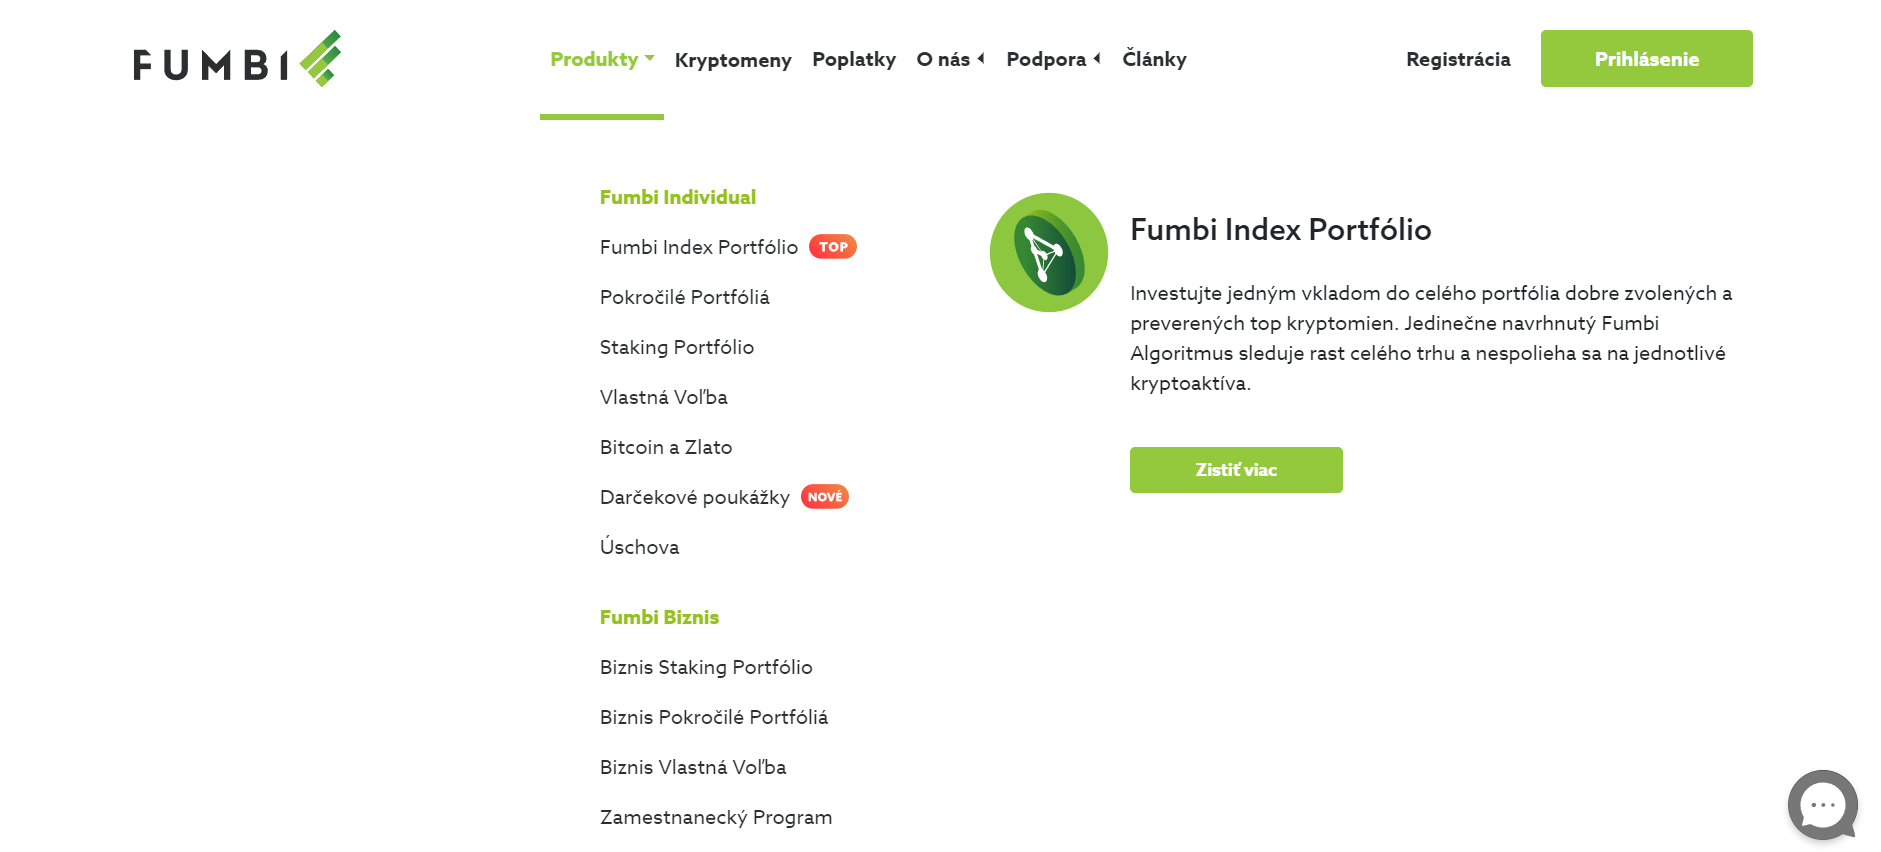 FUMBI portfolio produkty